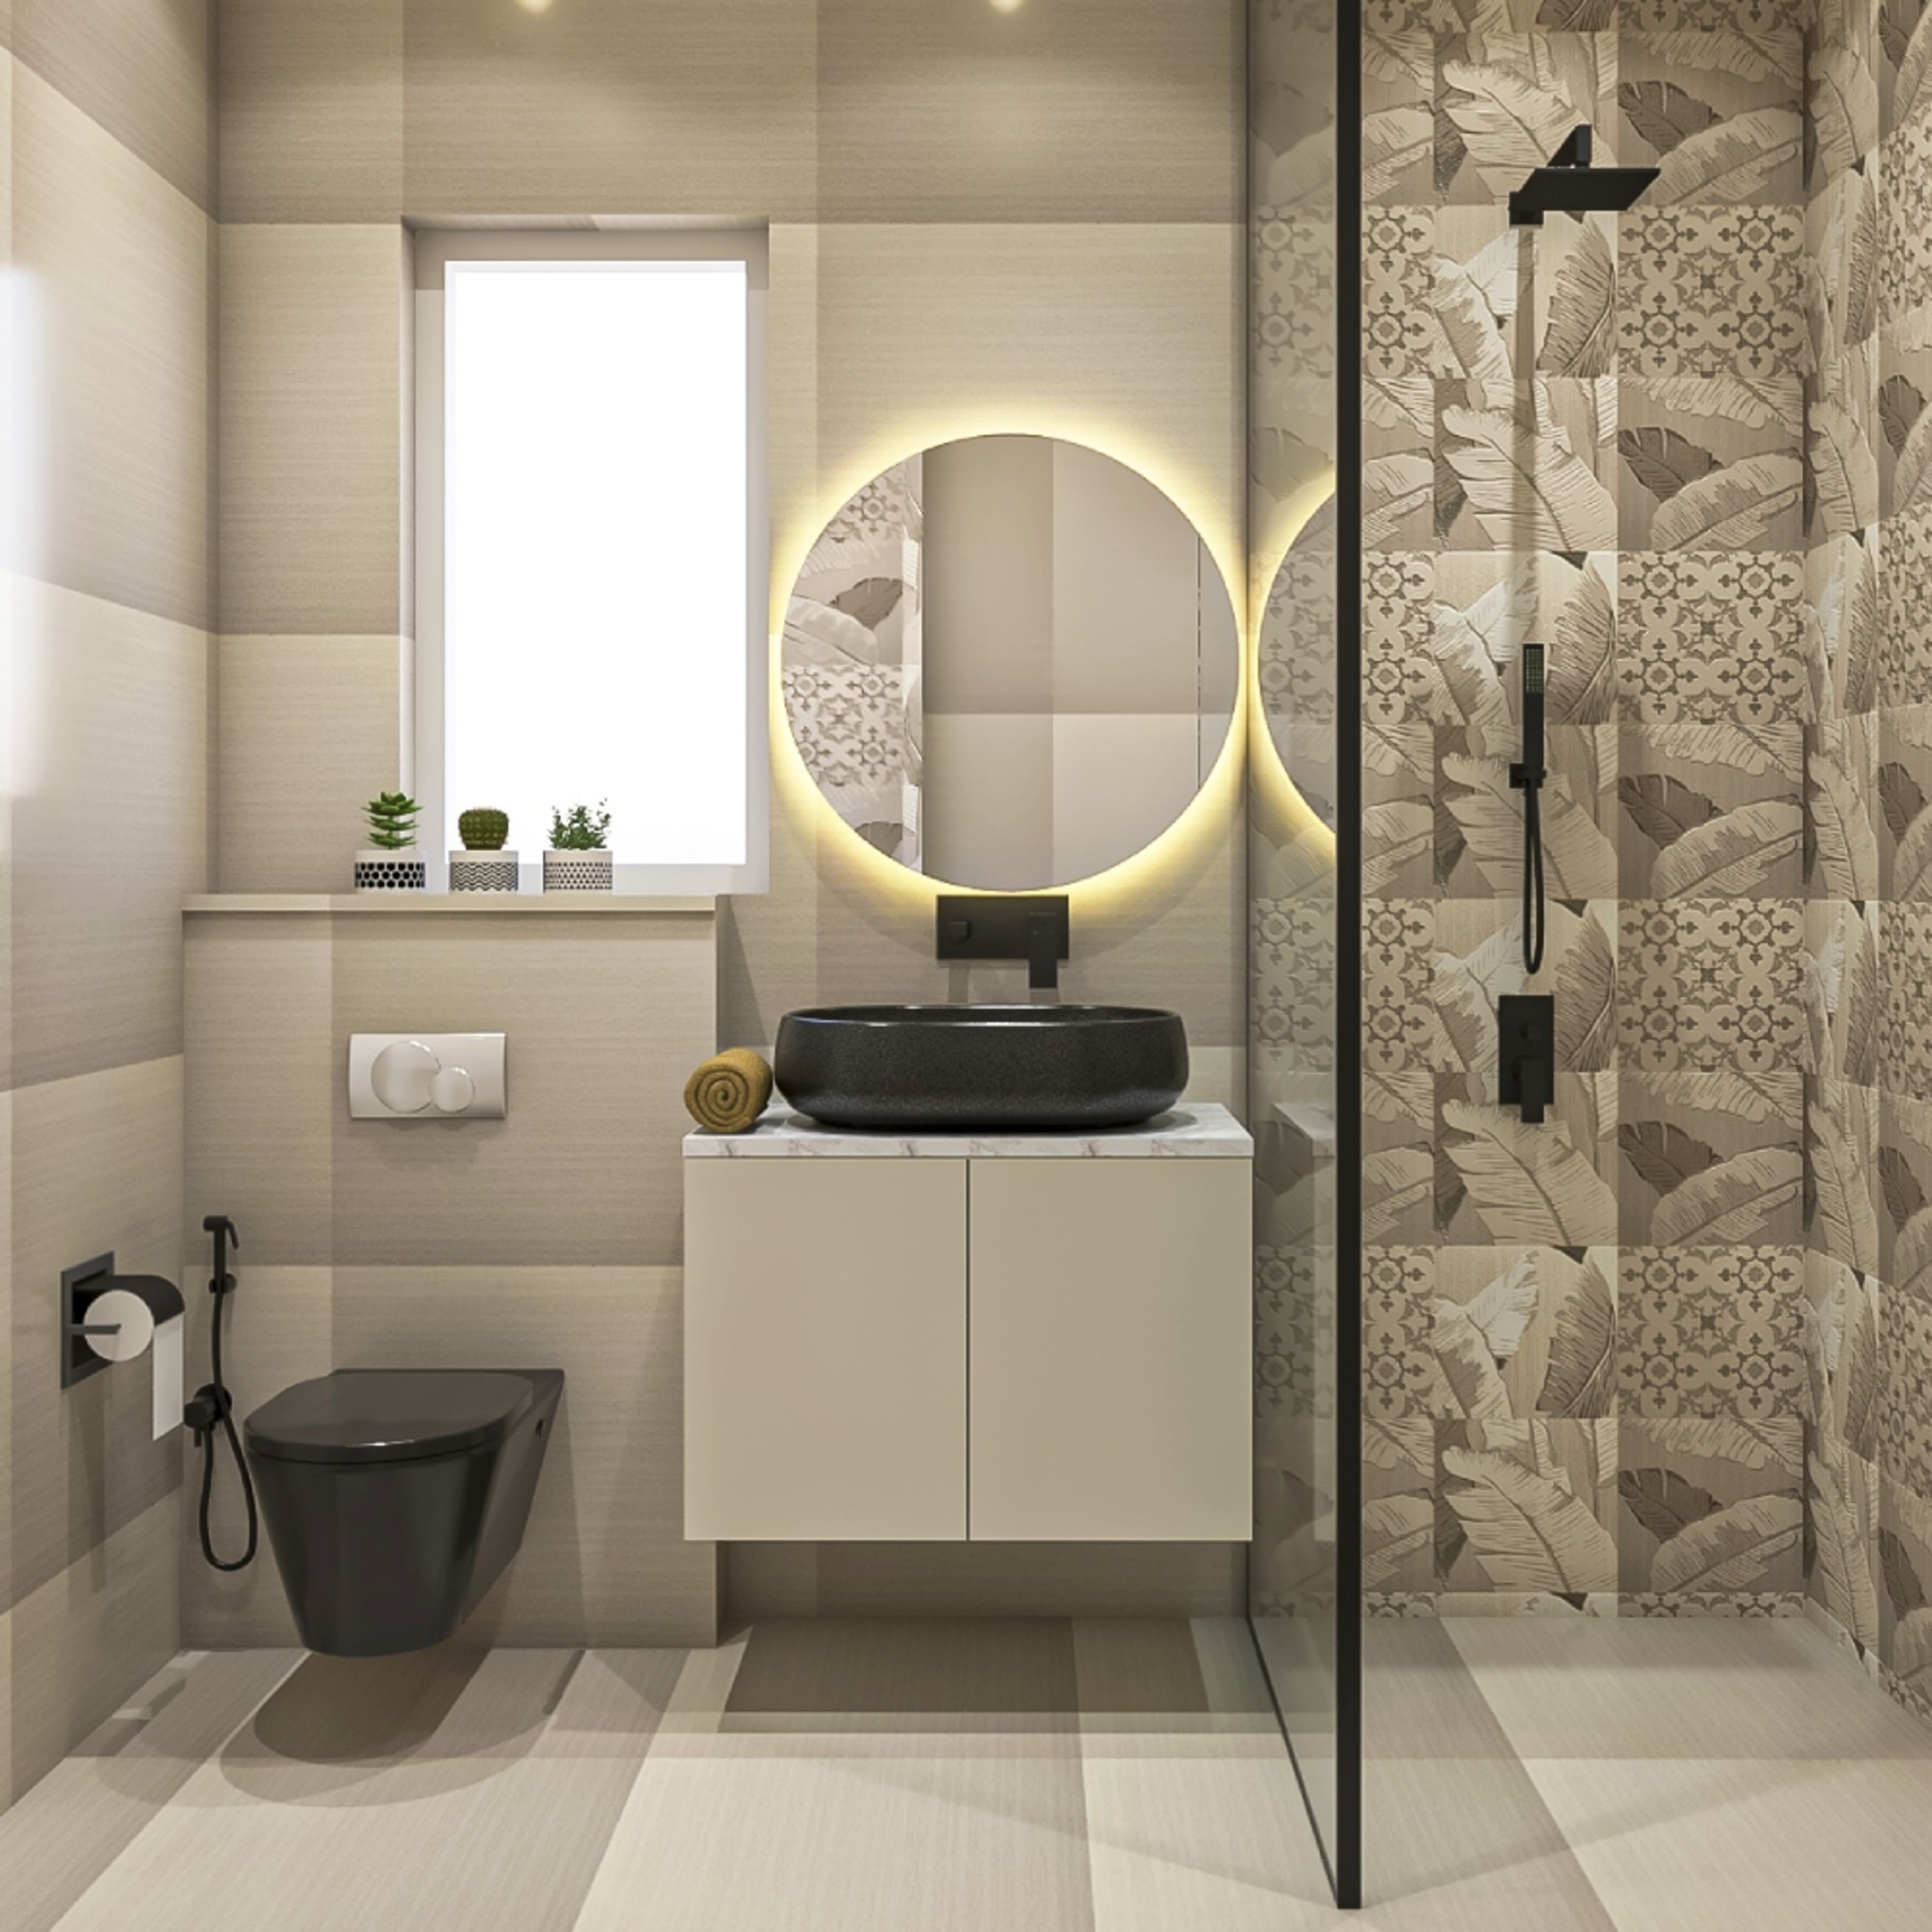 Grey And Beige Small Bathroom Design Idea With Circular Mirror - 7X5 Ft ...